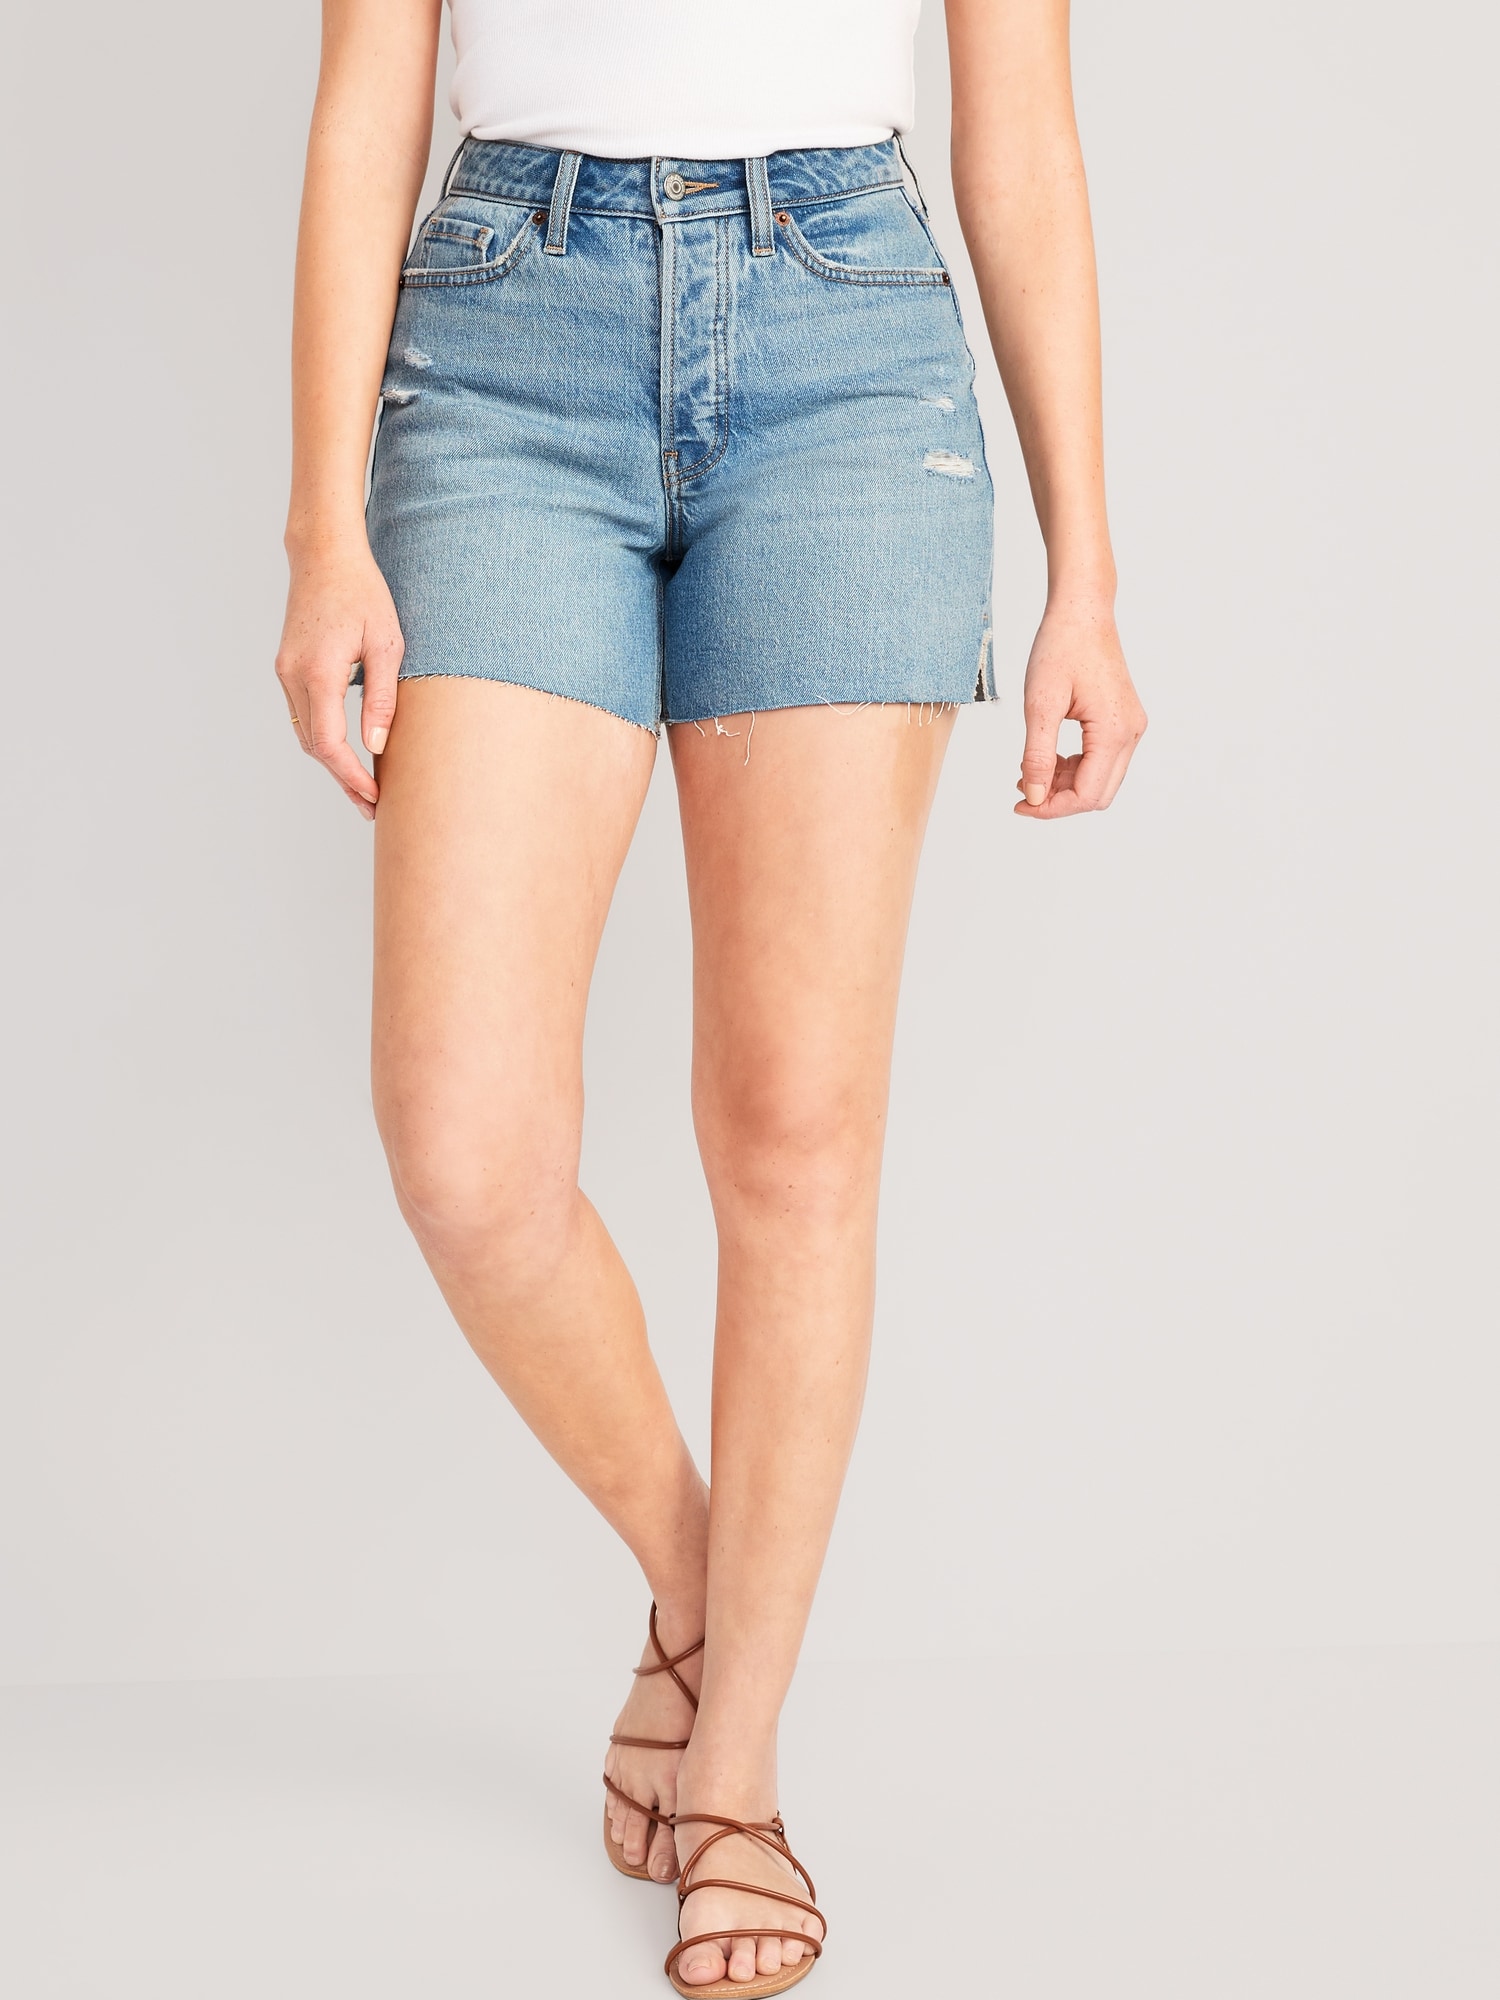 Dalset Verenigen herinneringen Curvy High-Waisted Button-Fly OG Straight Side-Slit Jean Shorts for Women  -- 5-inch inseam | Old Navy